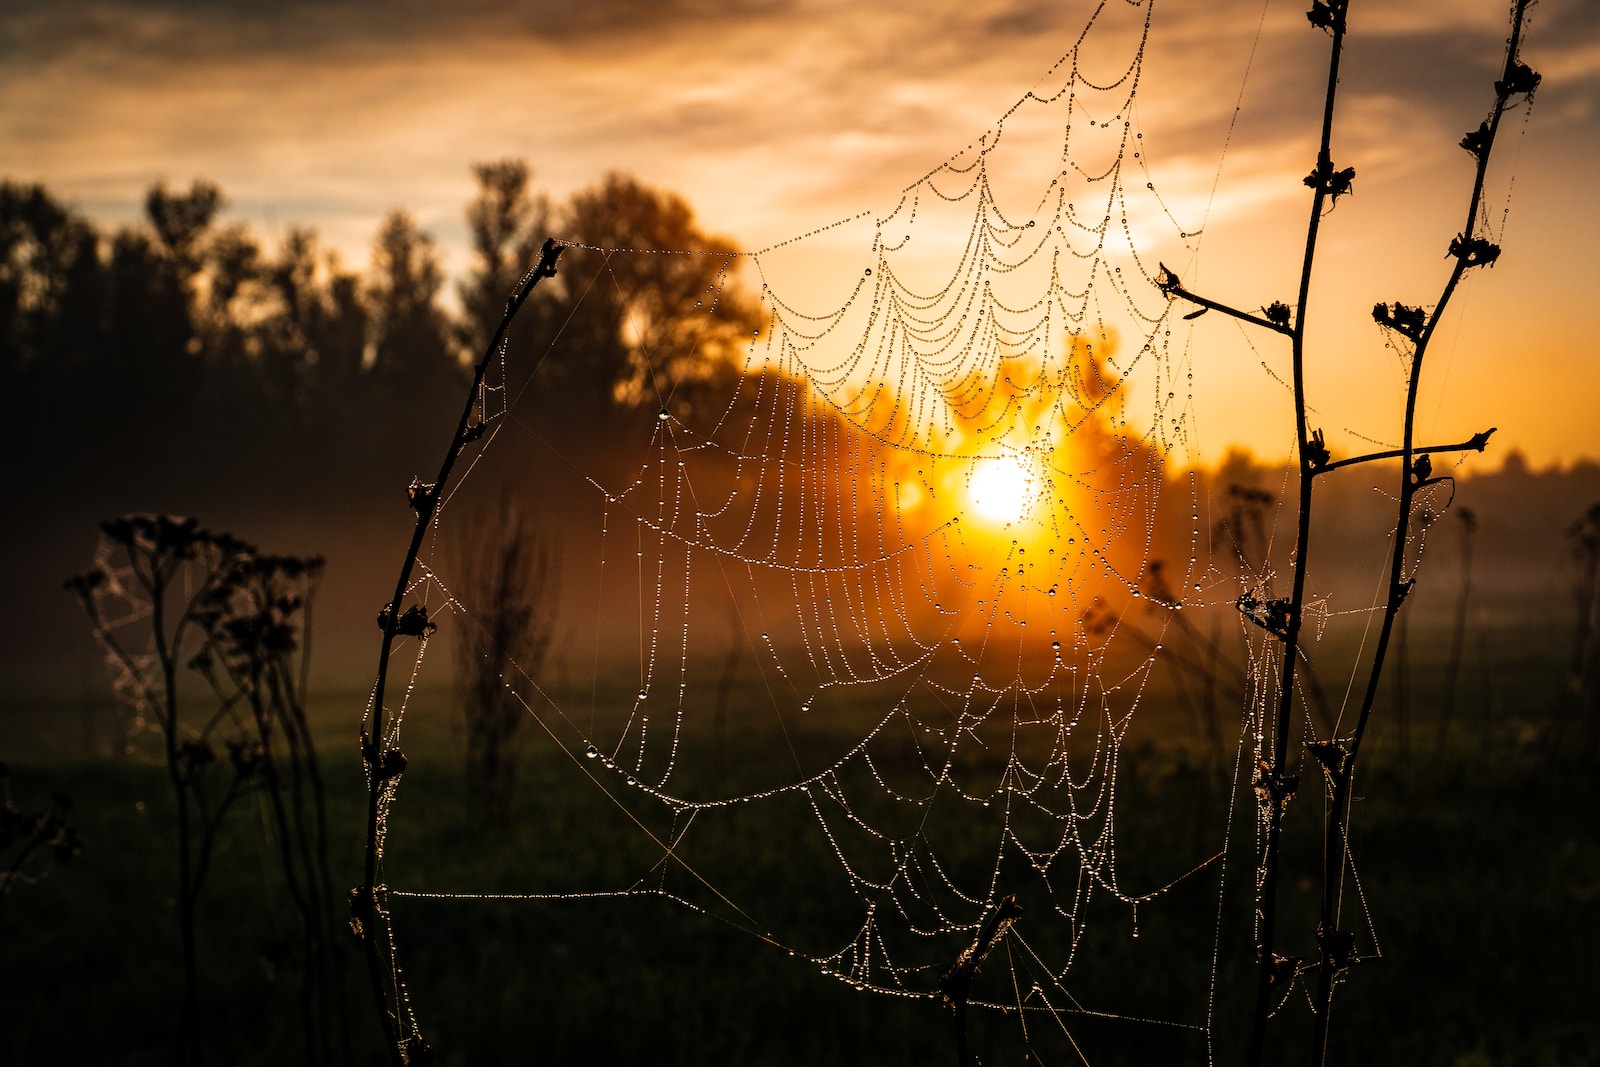 Spider Webs spider web on brown plant during sunset